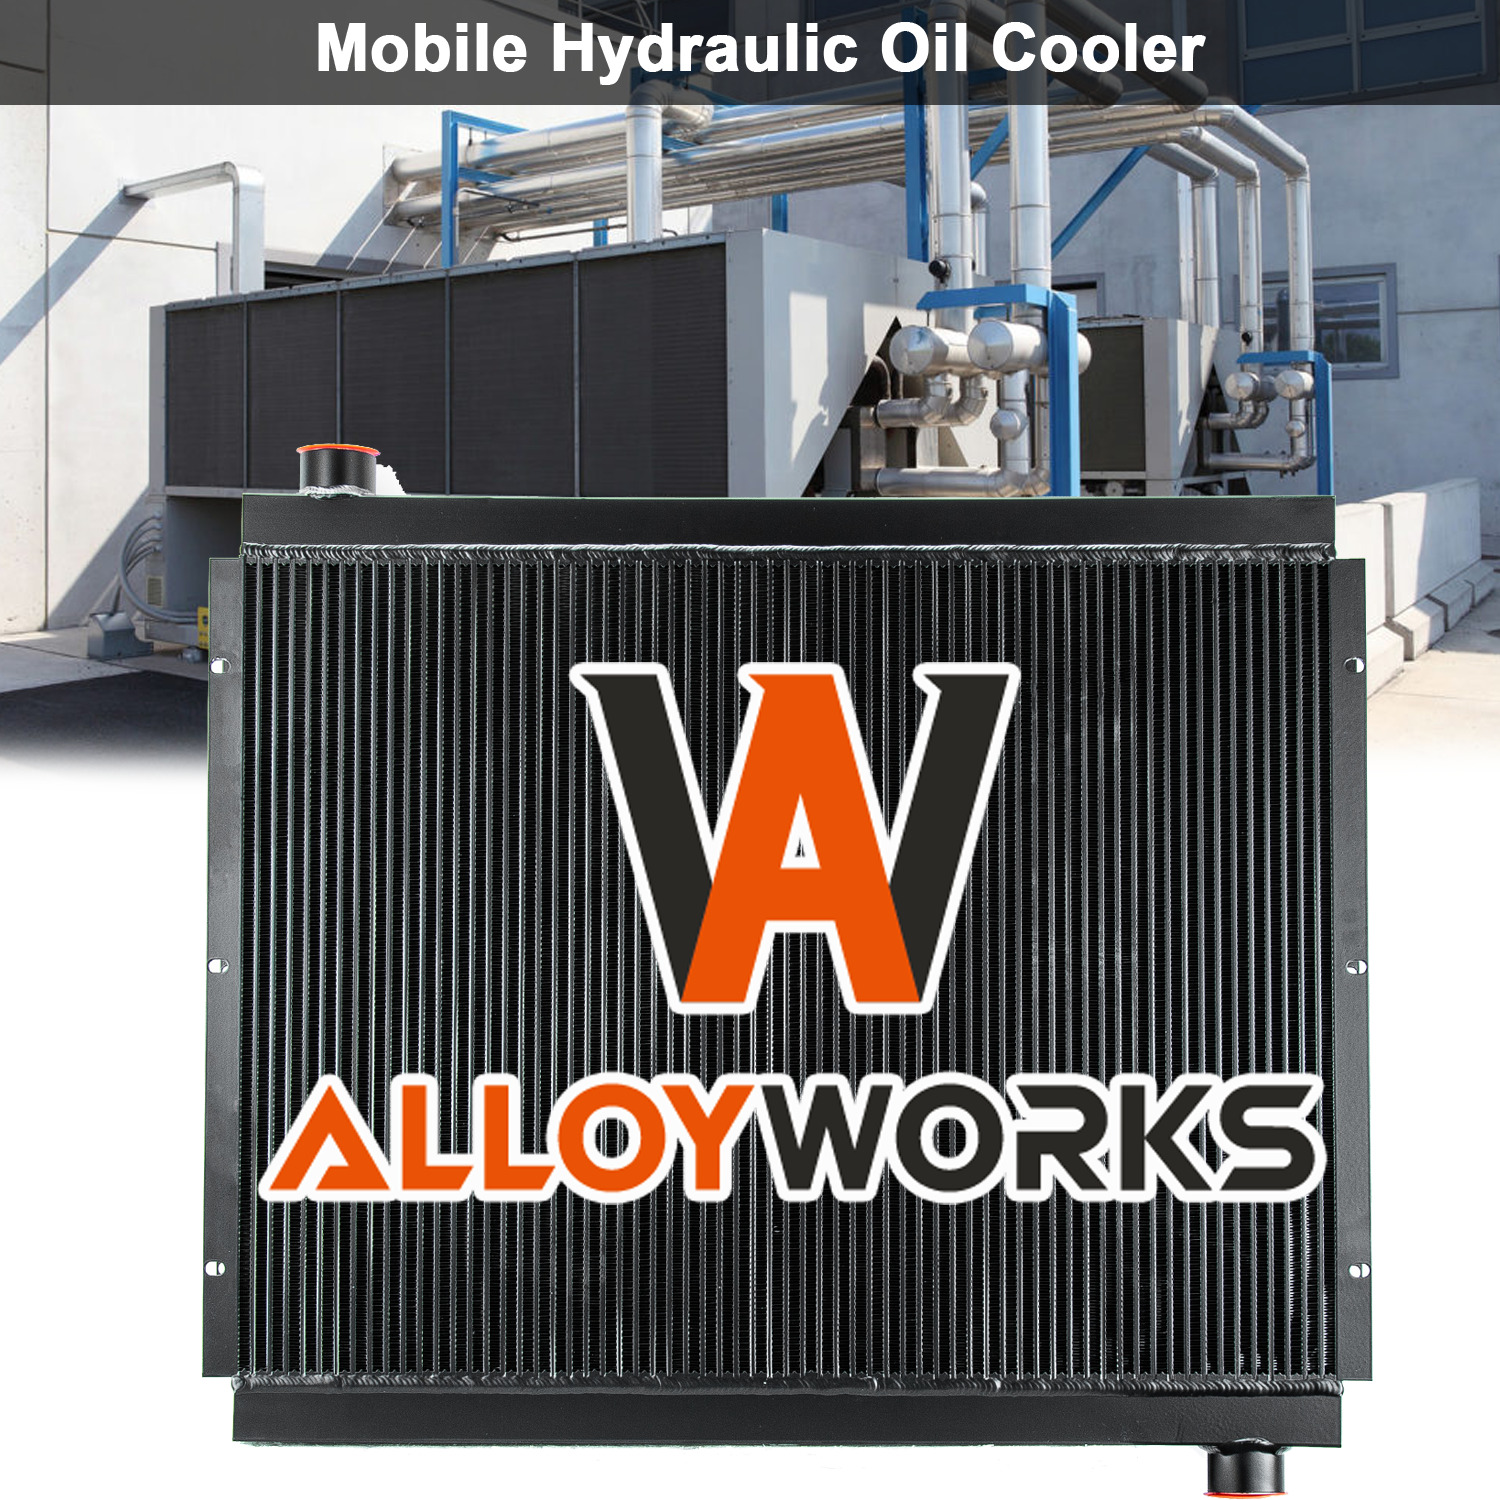 Mobile Hydraulic Oil Cooler fit Heavy Duty Industrial Hydraulic System